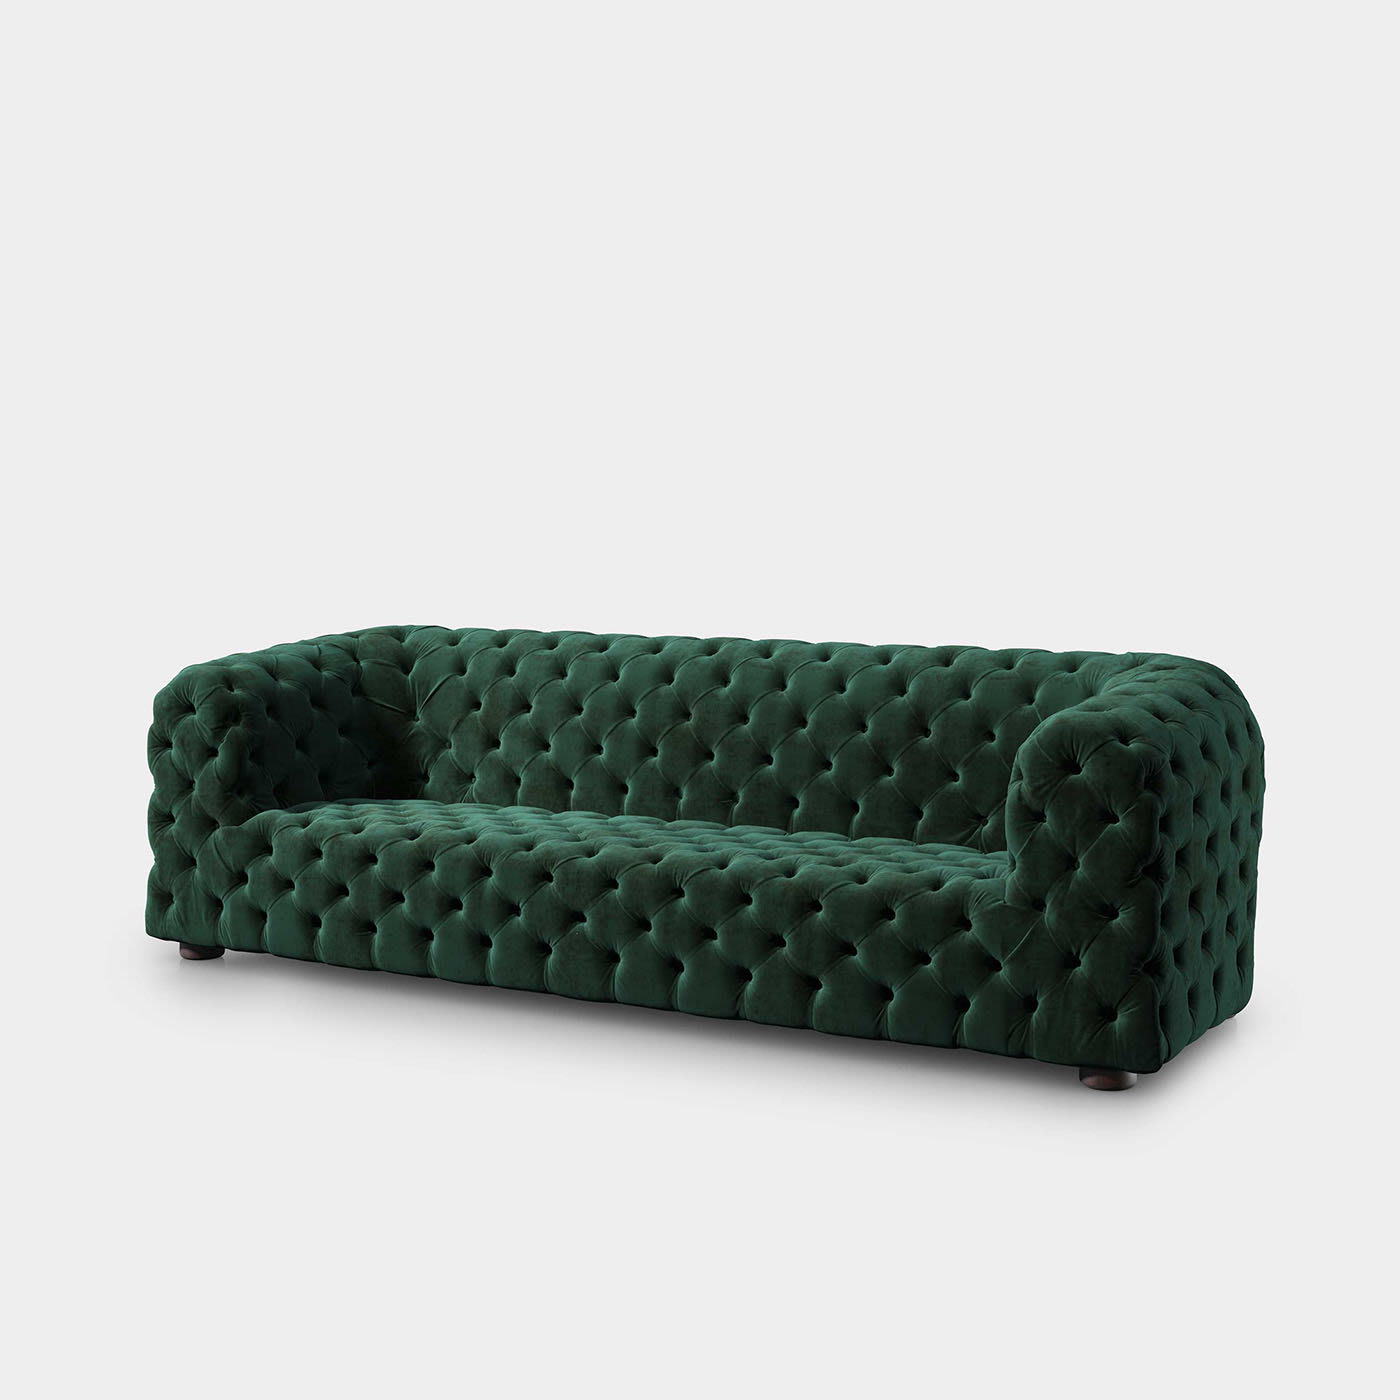 Tufted Rectangular Green Sofa - Loopo